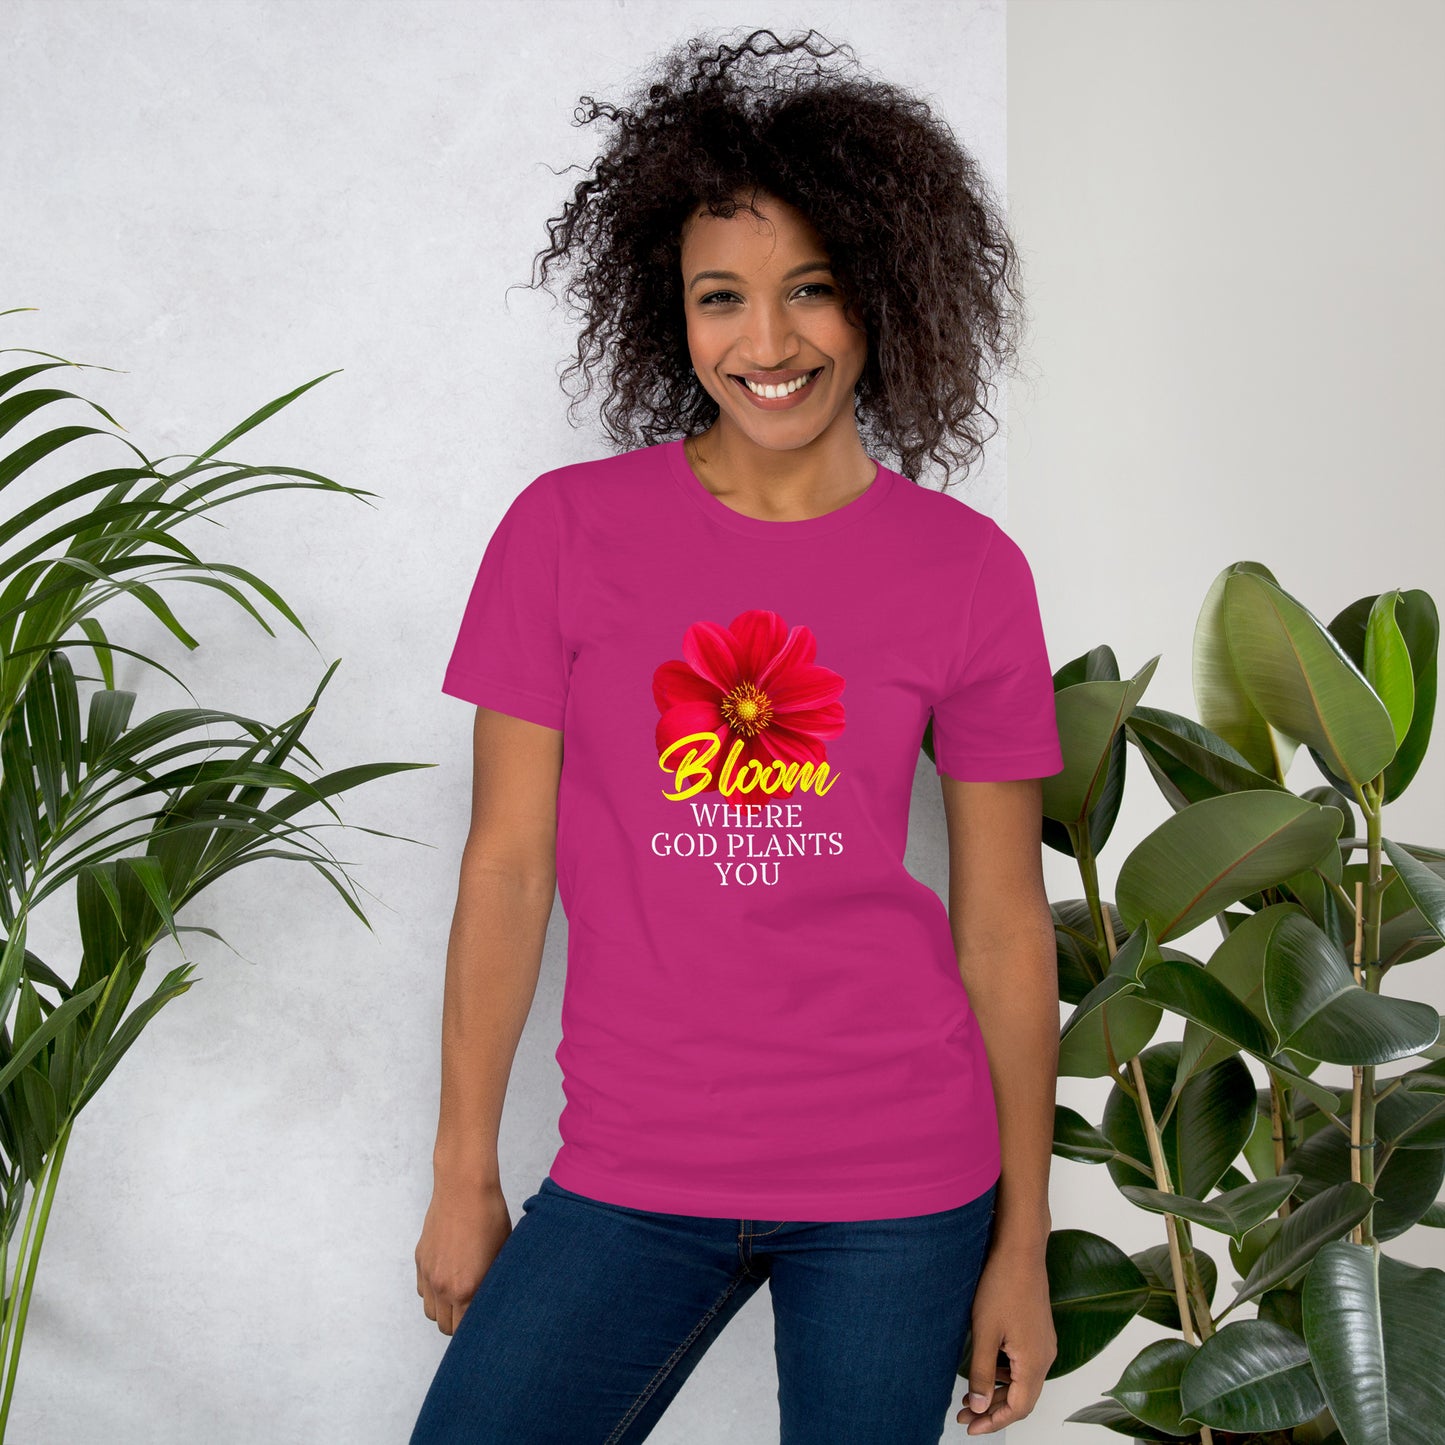 "Bloom Where God Plants You" Unisex T-shirt (2 Color Options)